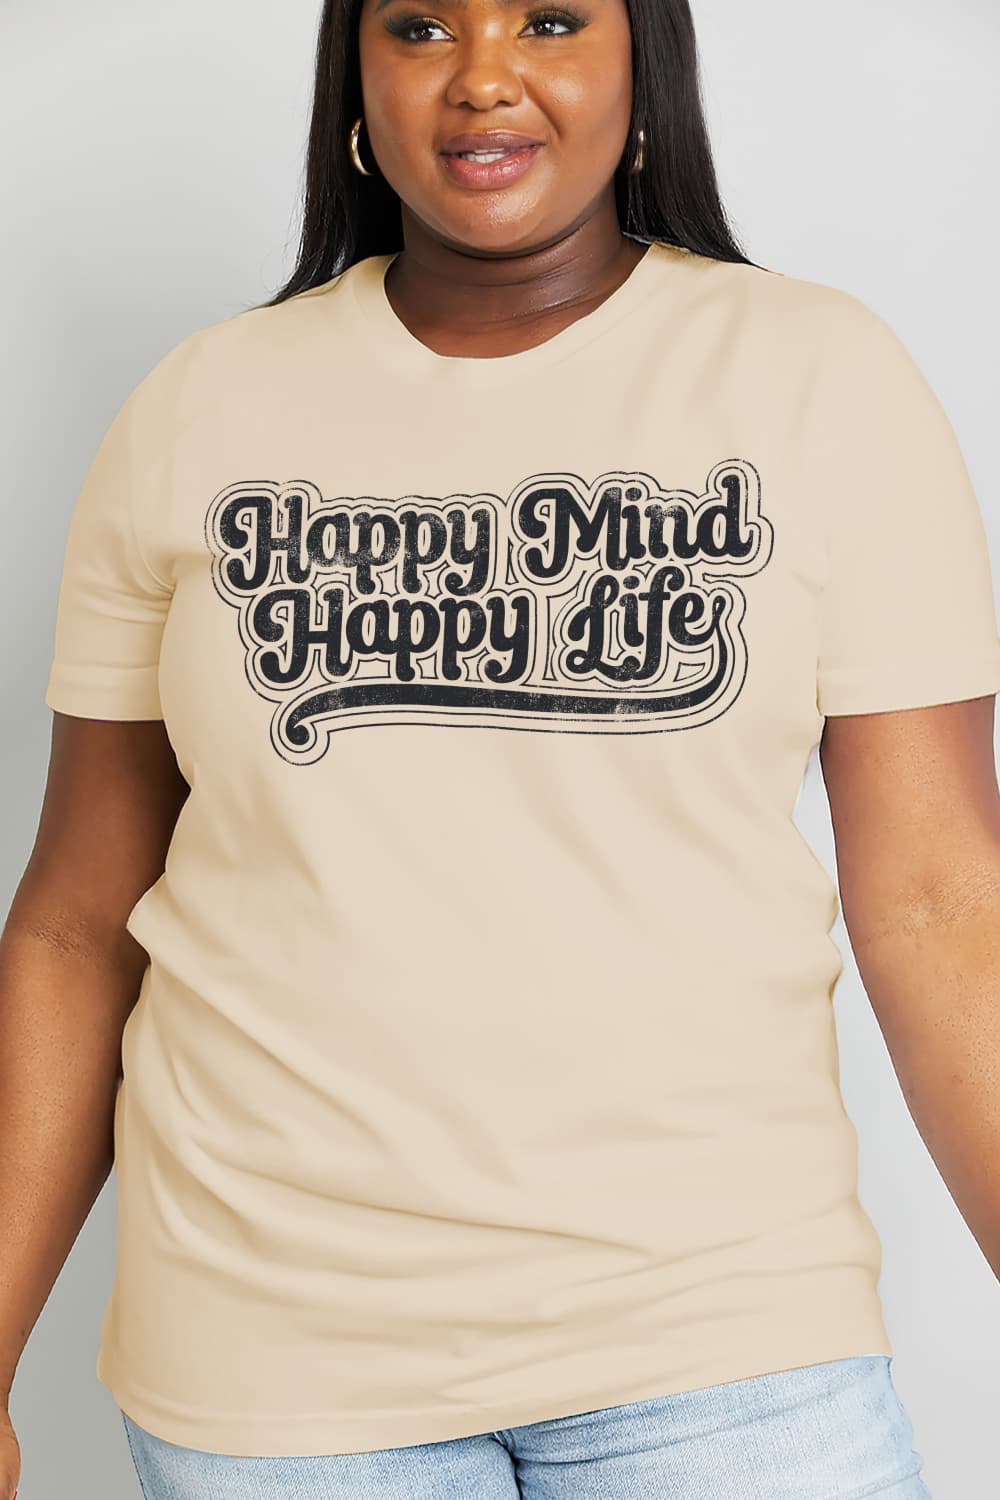 Women's Full Size Happy Mind Happy Life Graphic Cotton Tee